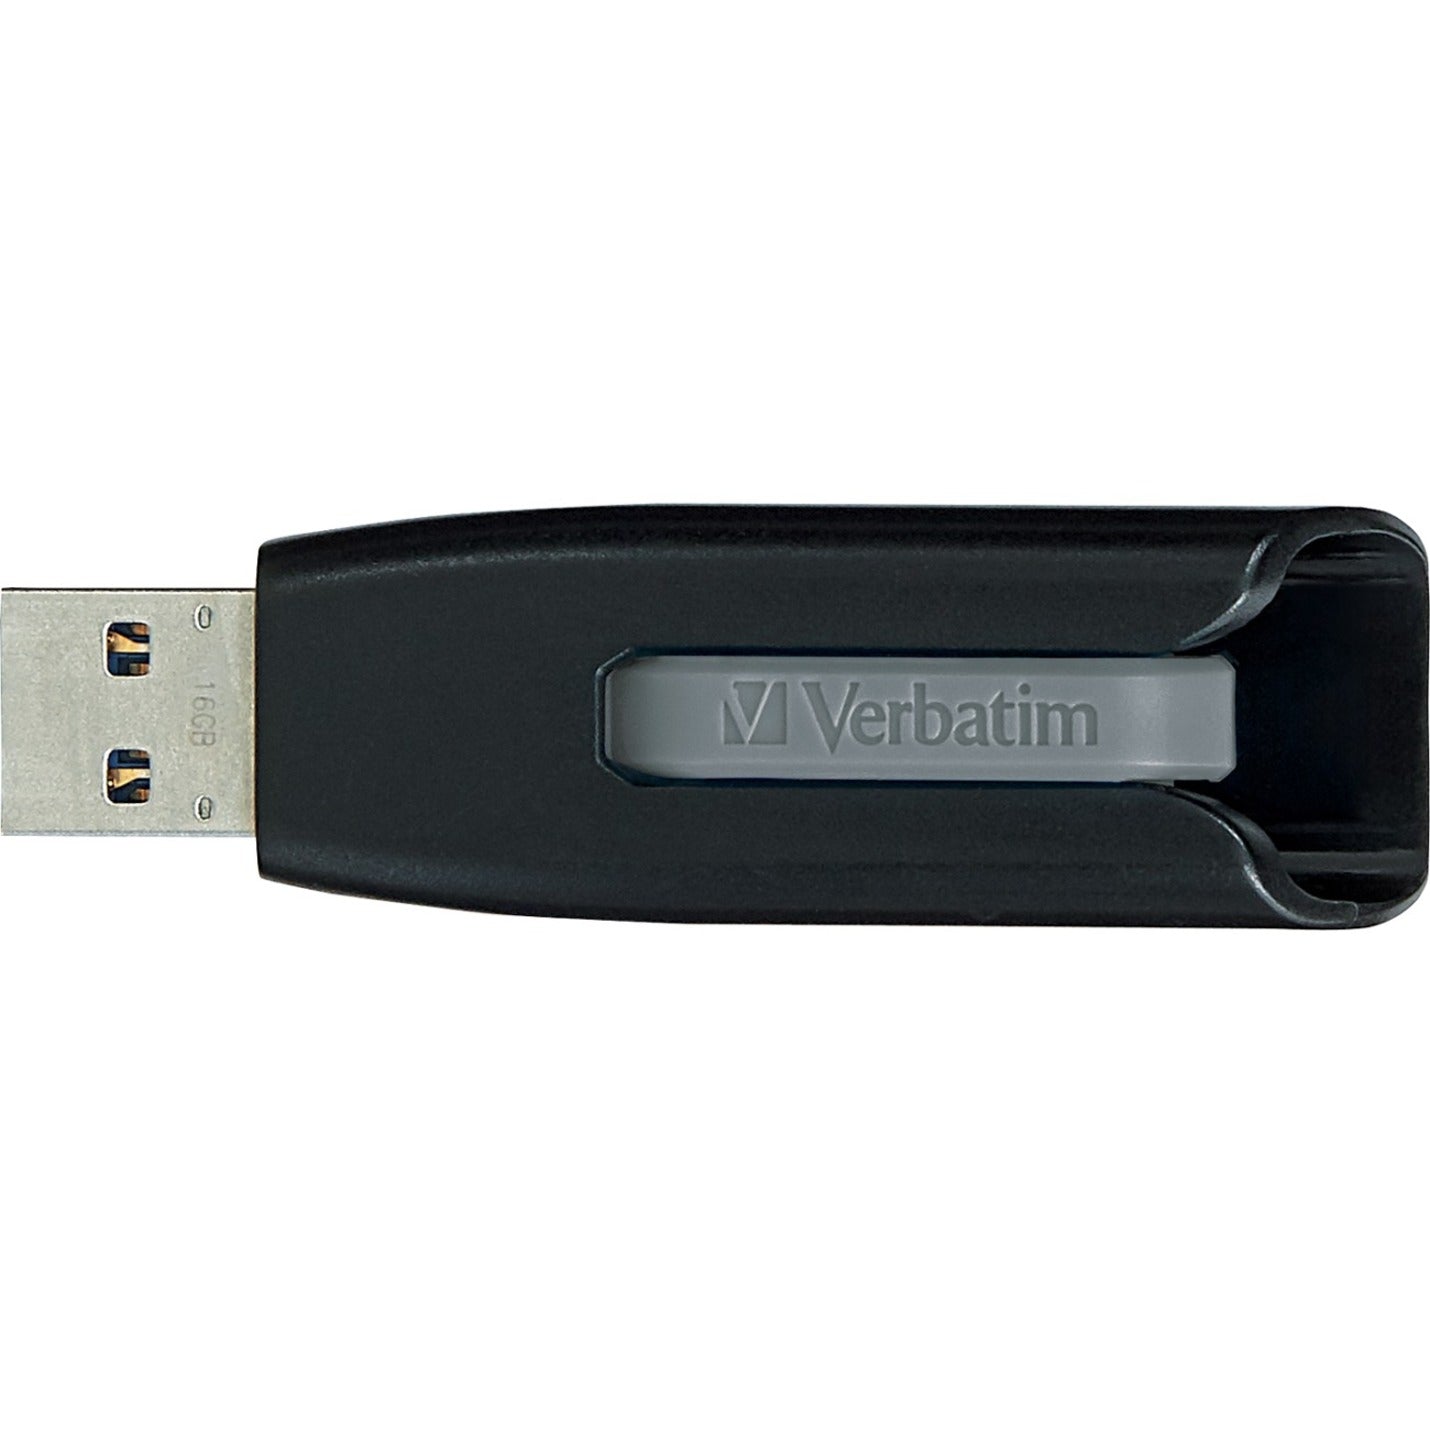 Microban 49189 Store 'n' Go V3 USB Drive 125GB Gray 125GB、グレーMicroban 49189 Store 'n' Go V3 USBドライブ